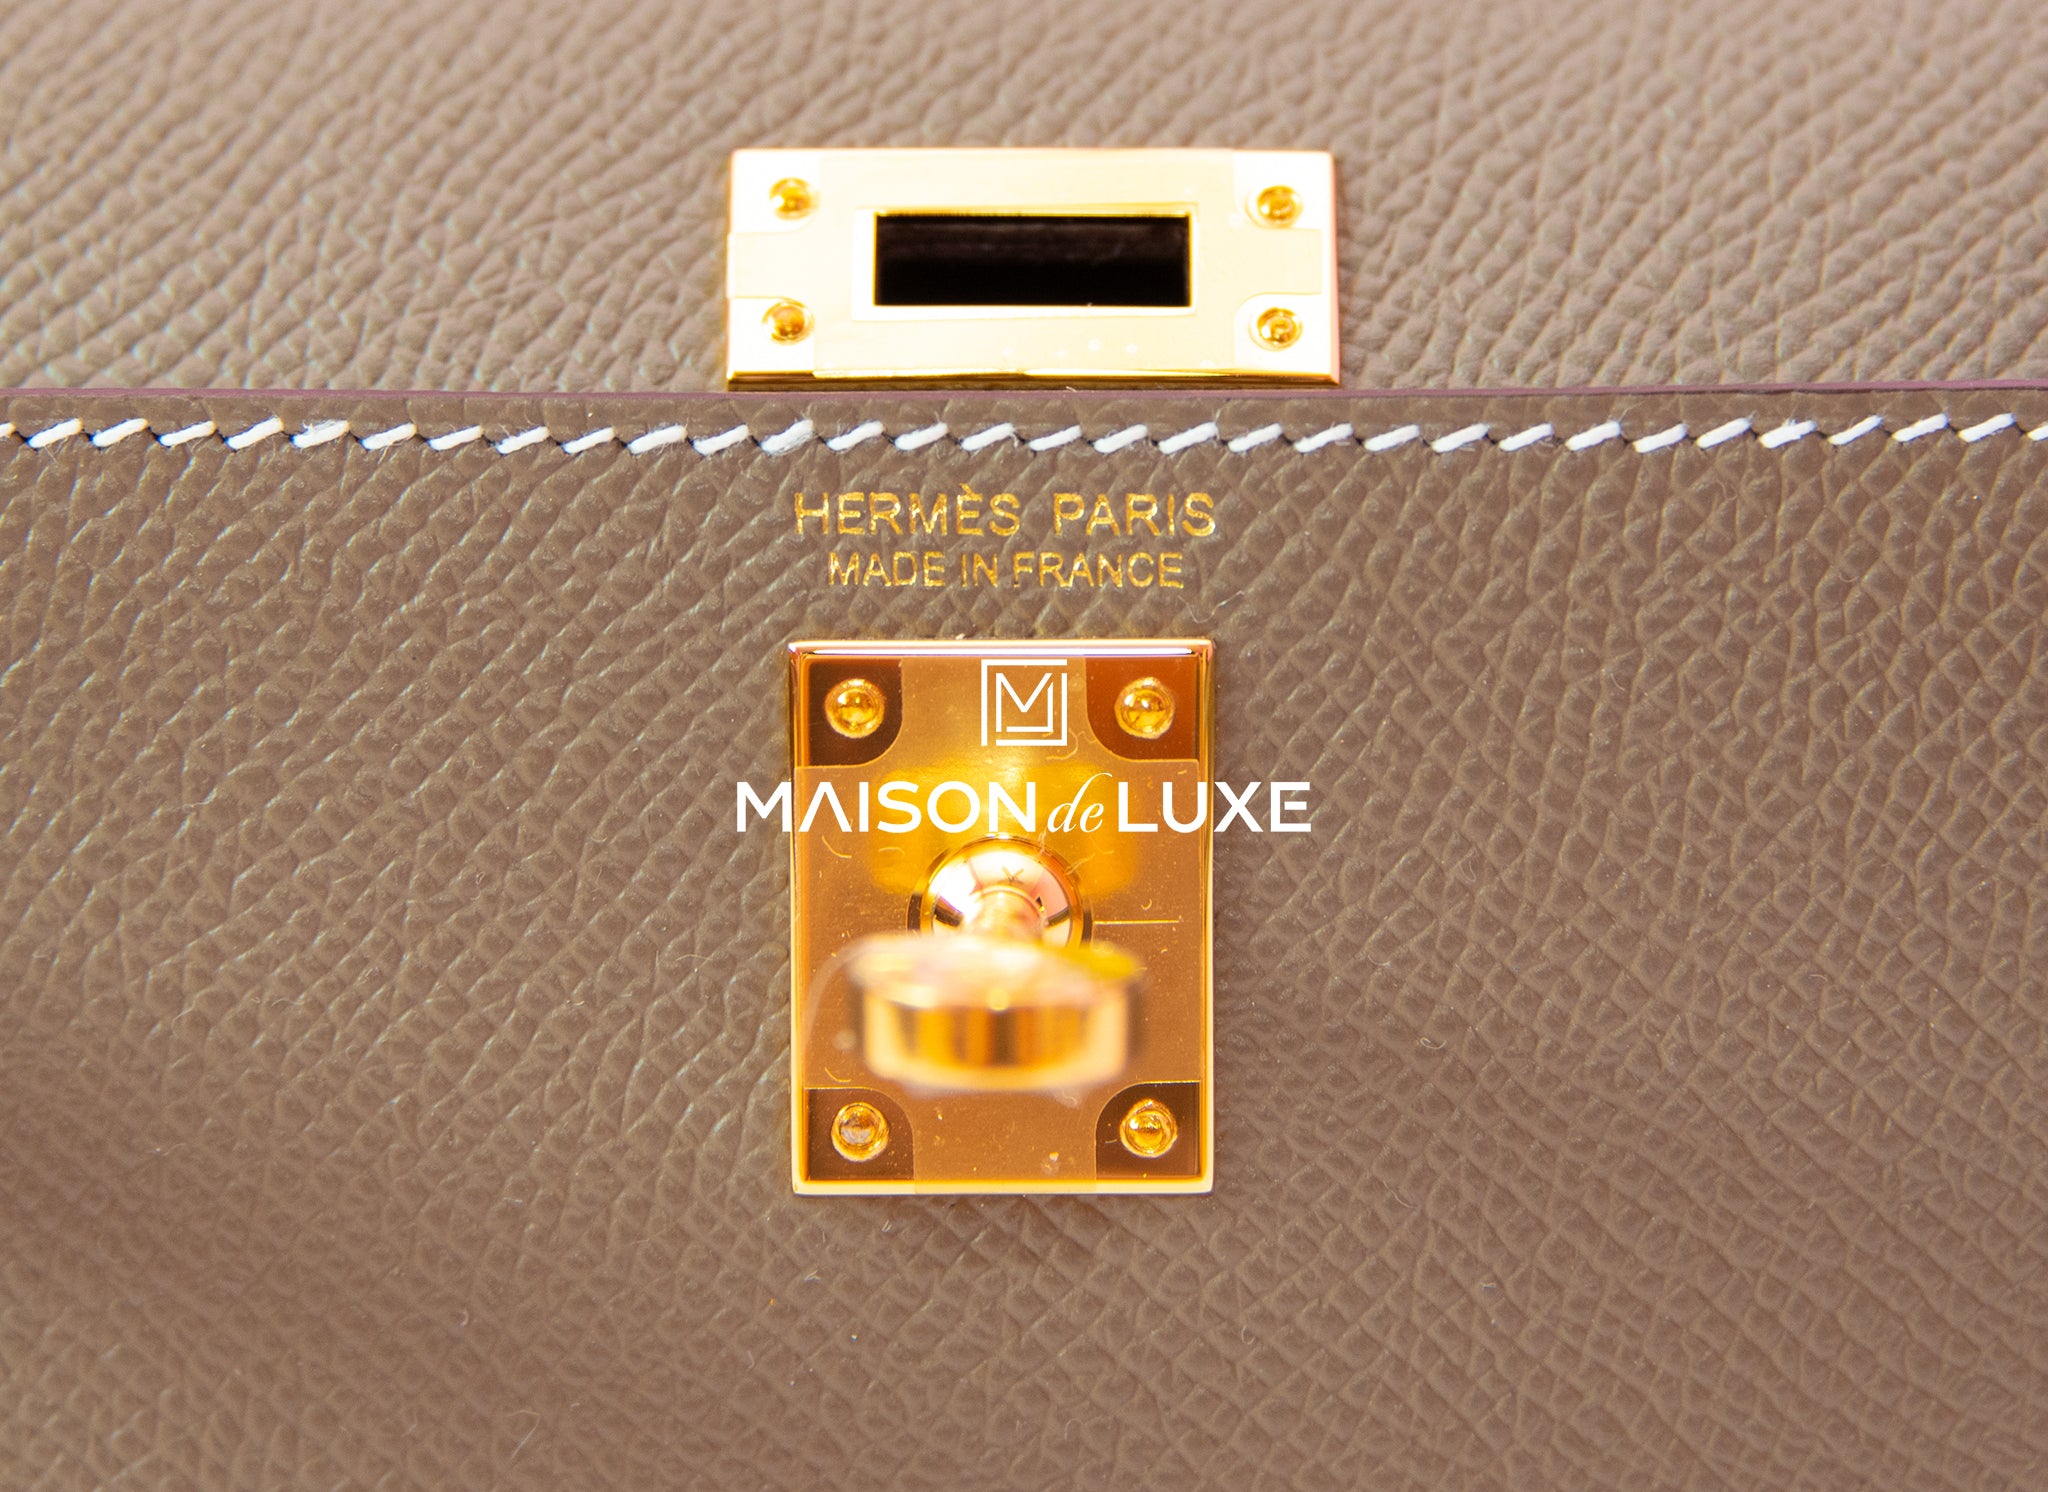 Authentic Hermès Mini Kelly 20 Sellier Bag Etoupe Epsom Leather Ghw